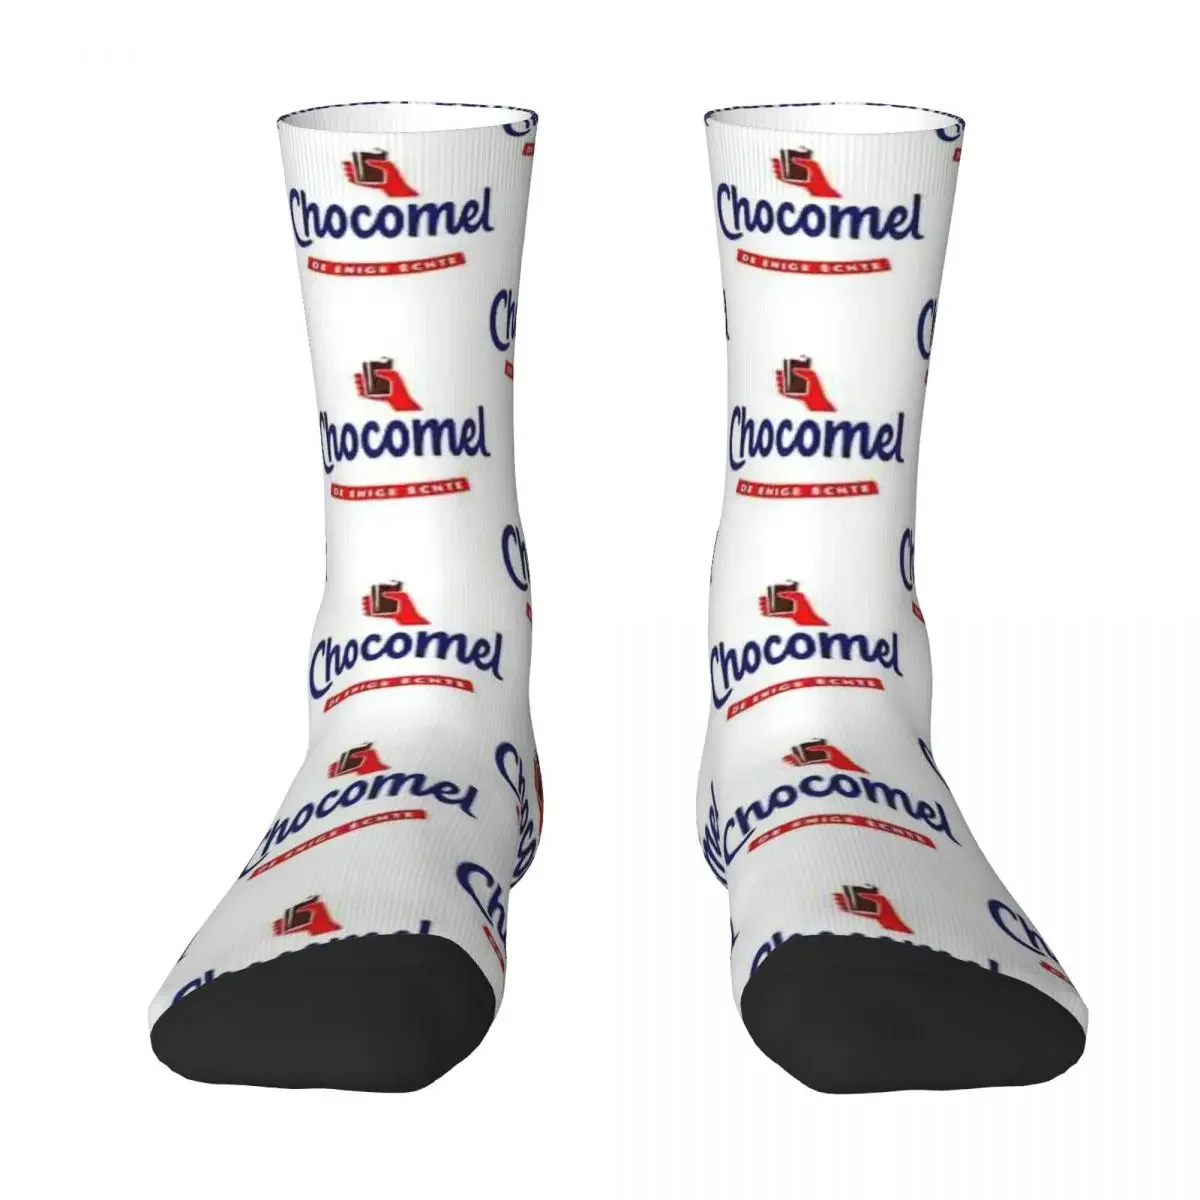 

Chocomel Chocolademelk Nederland Classic Socks Harajuku Super Soft Stockings All Season Long Socks for Unisex Christmas Gifts